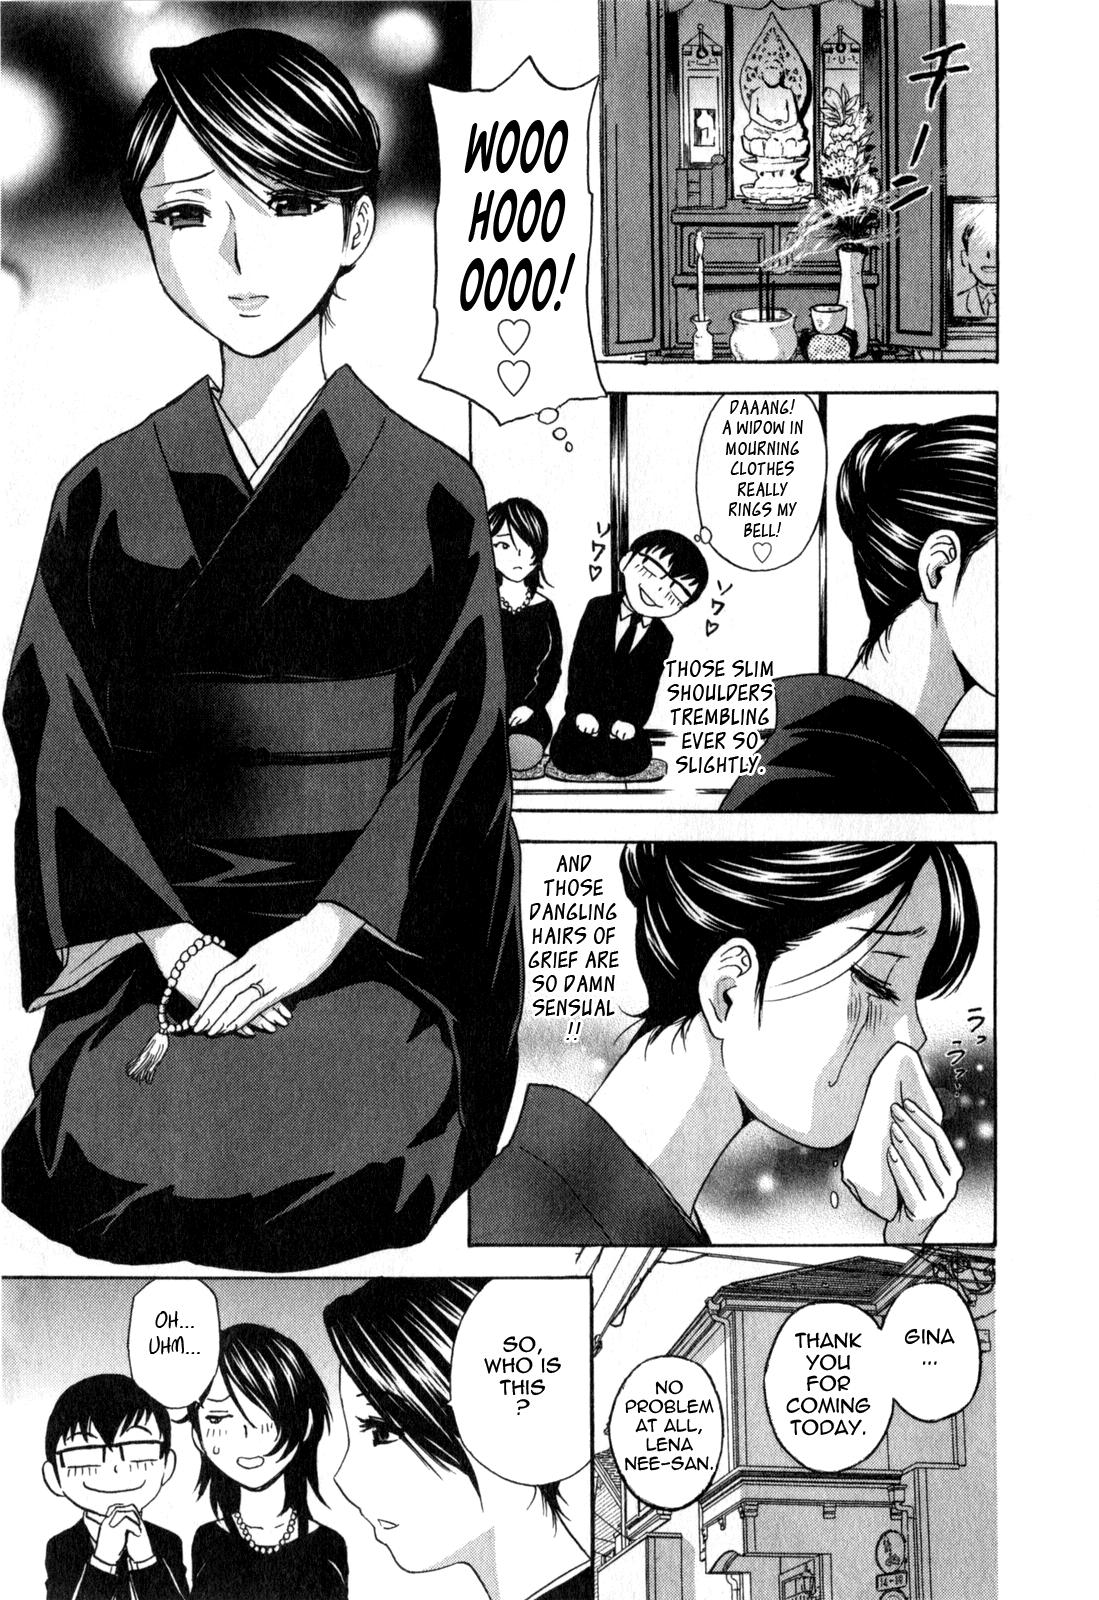 [Hidemaru] Life with Married Women Just Like a Manga 3 - Ch. 1-6 [English] {Tadanohito} 92